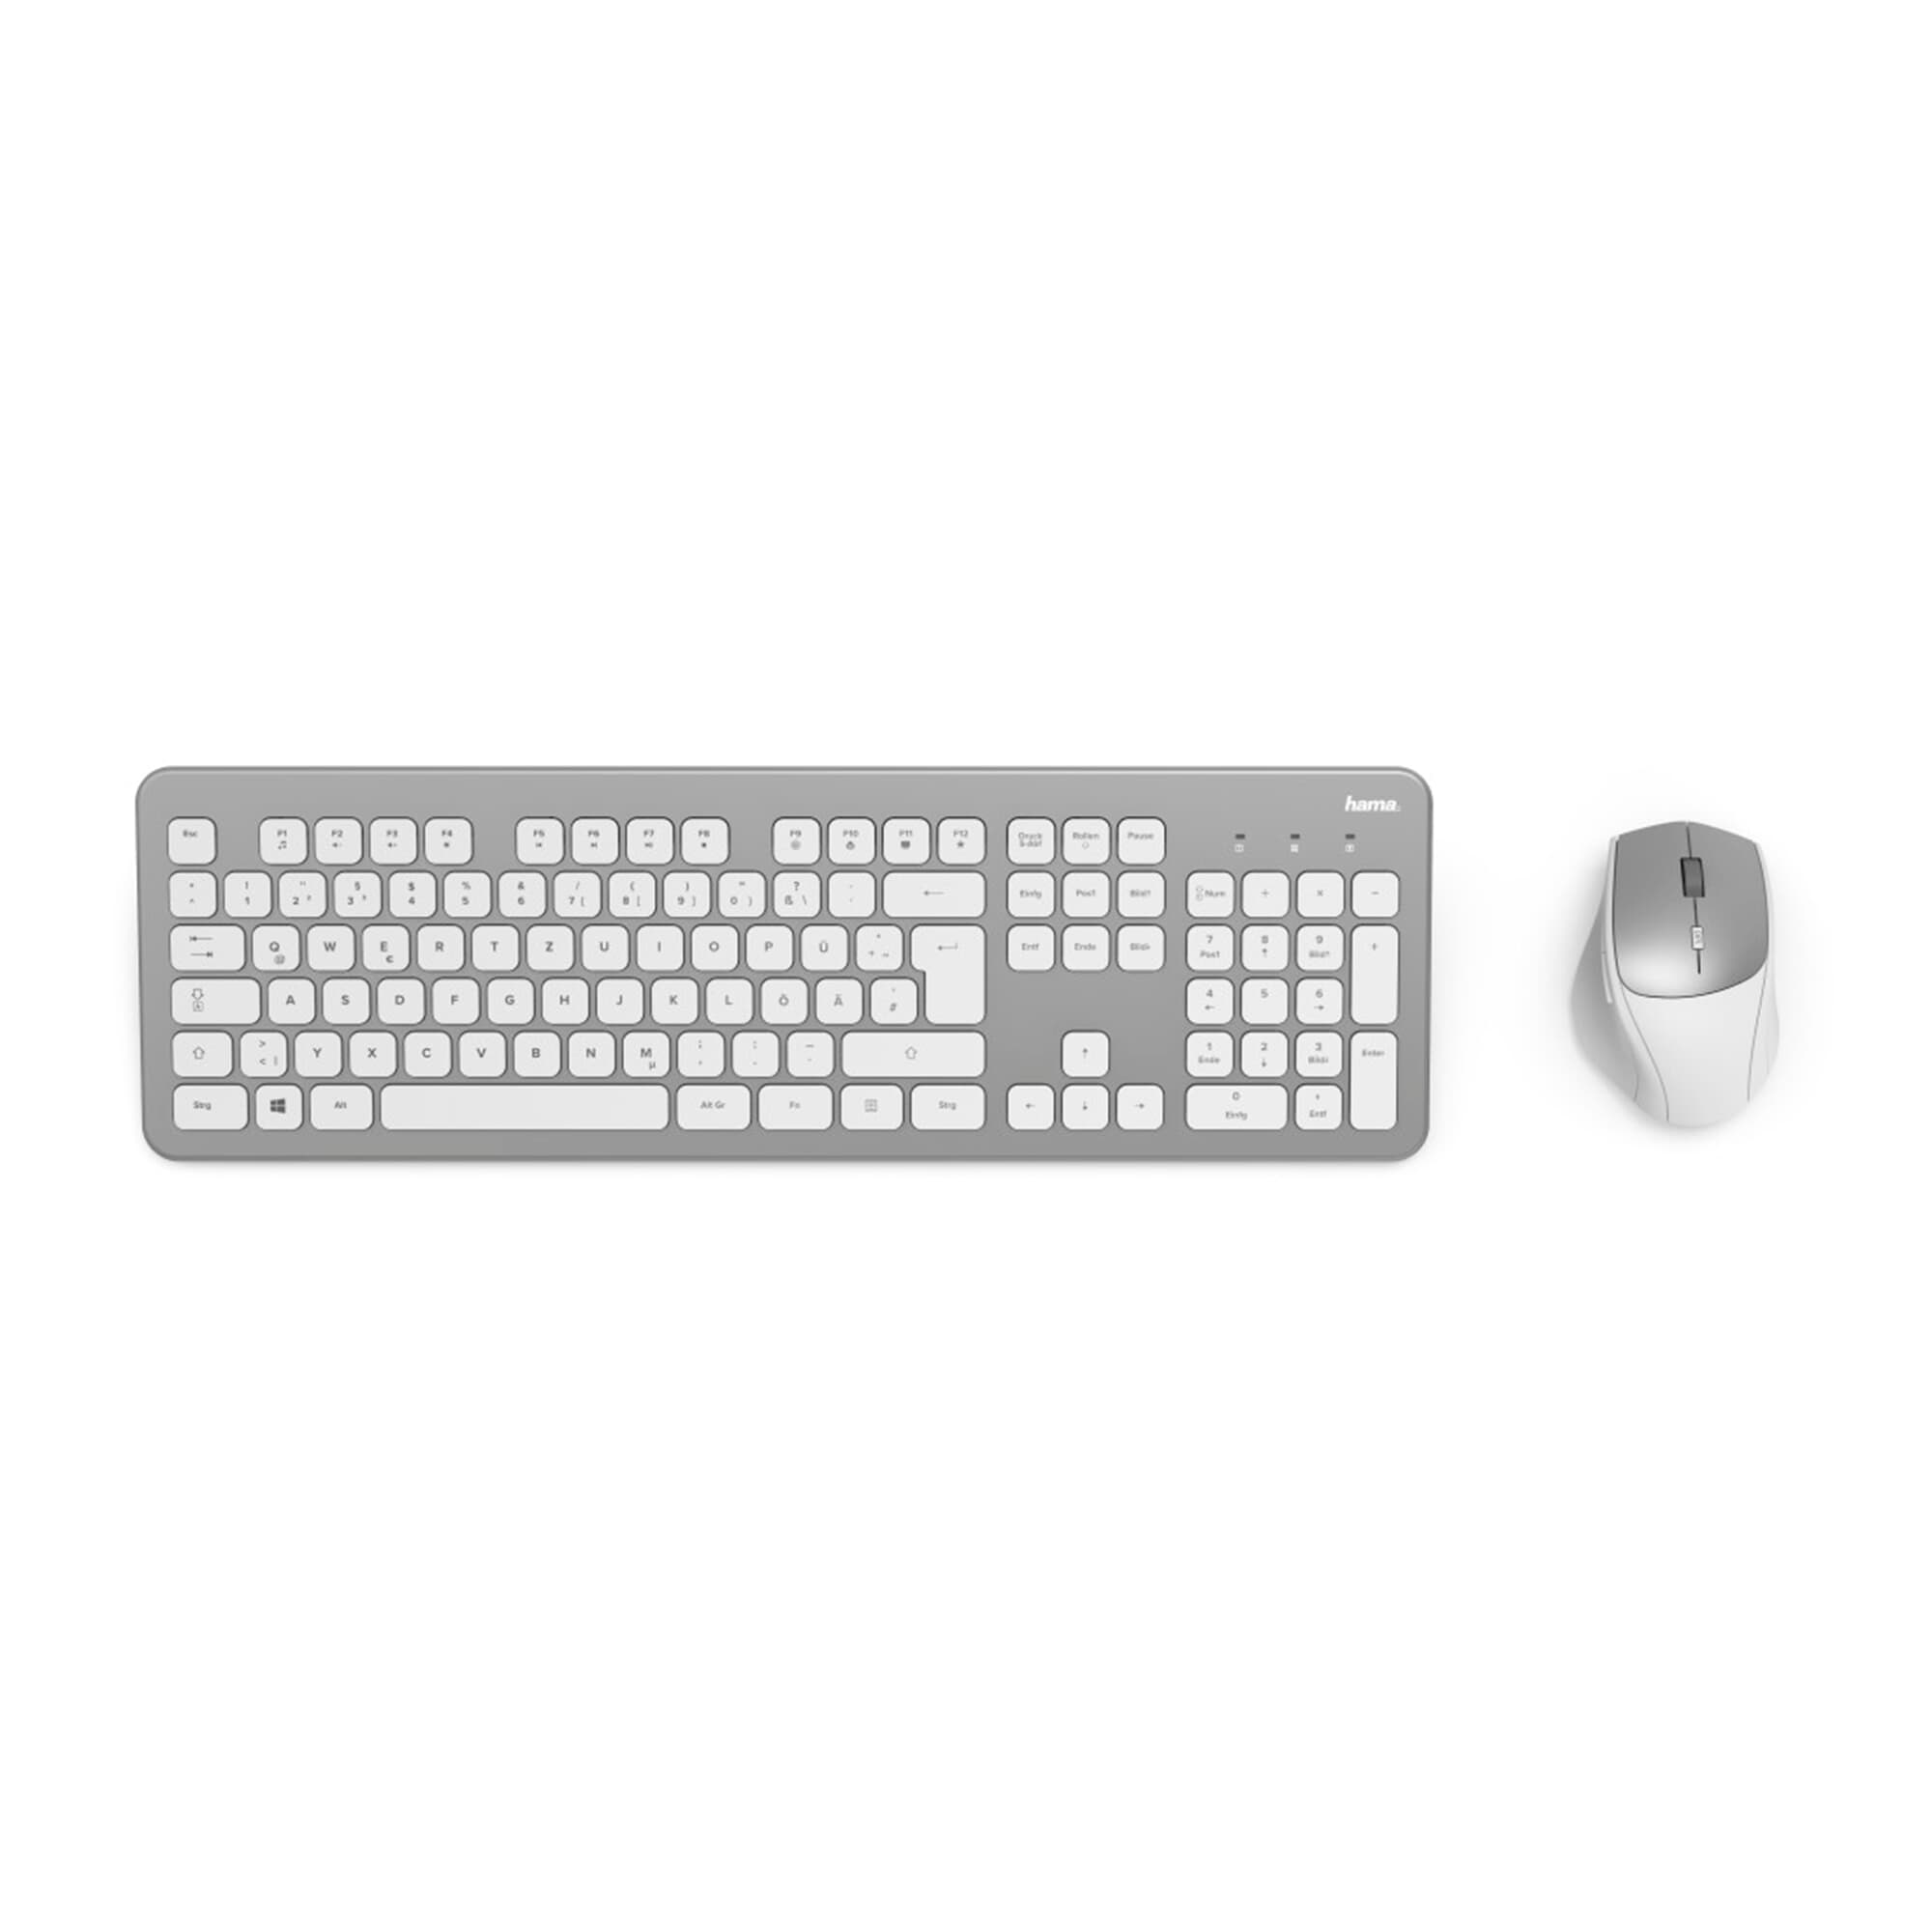 KMW-700, Tastatur/Maus HAMA Silber/Weiß Set,